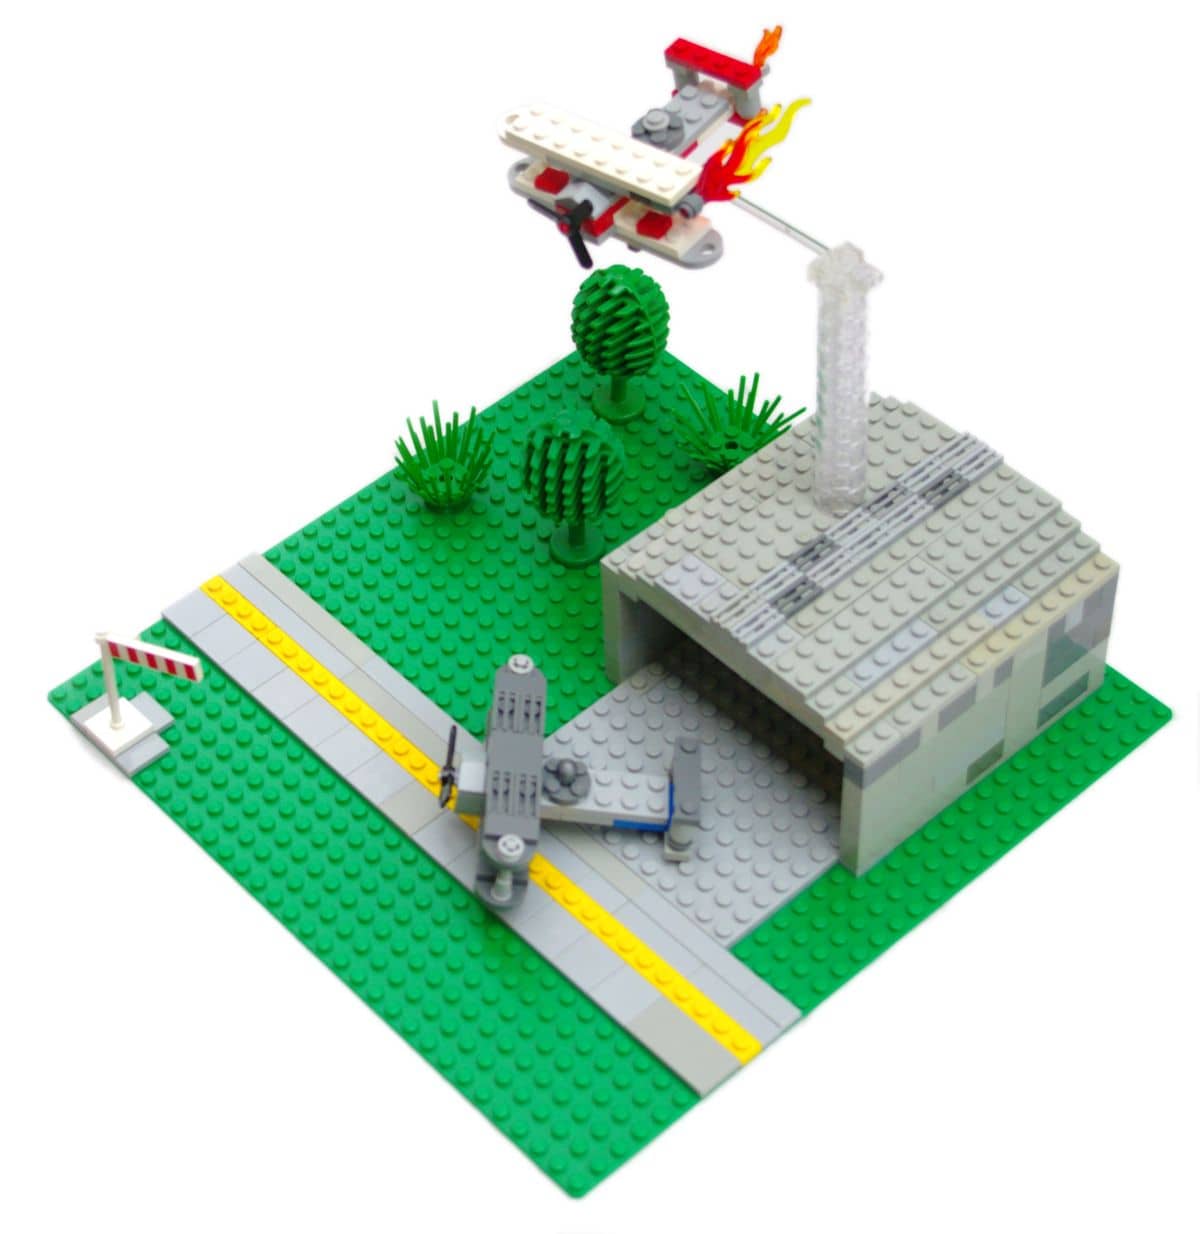 Concurs Microscale Old City – Creatia 7: Baza aeriana cu biplane